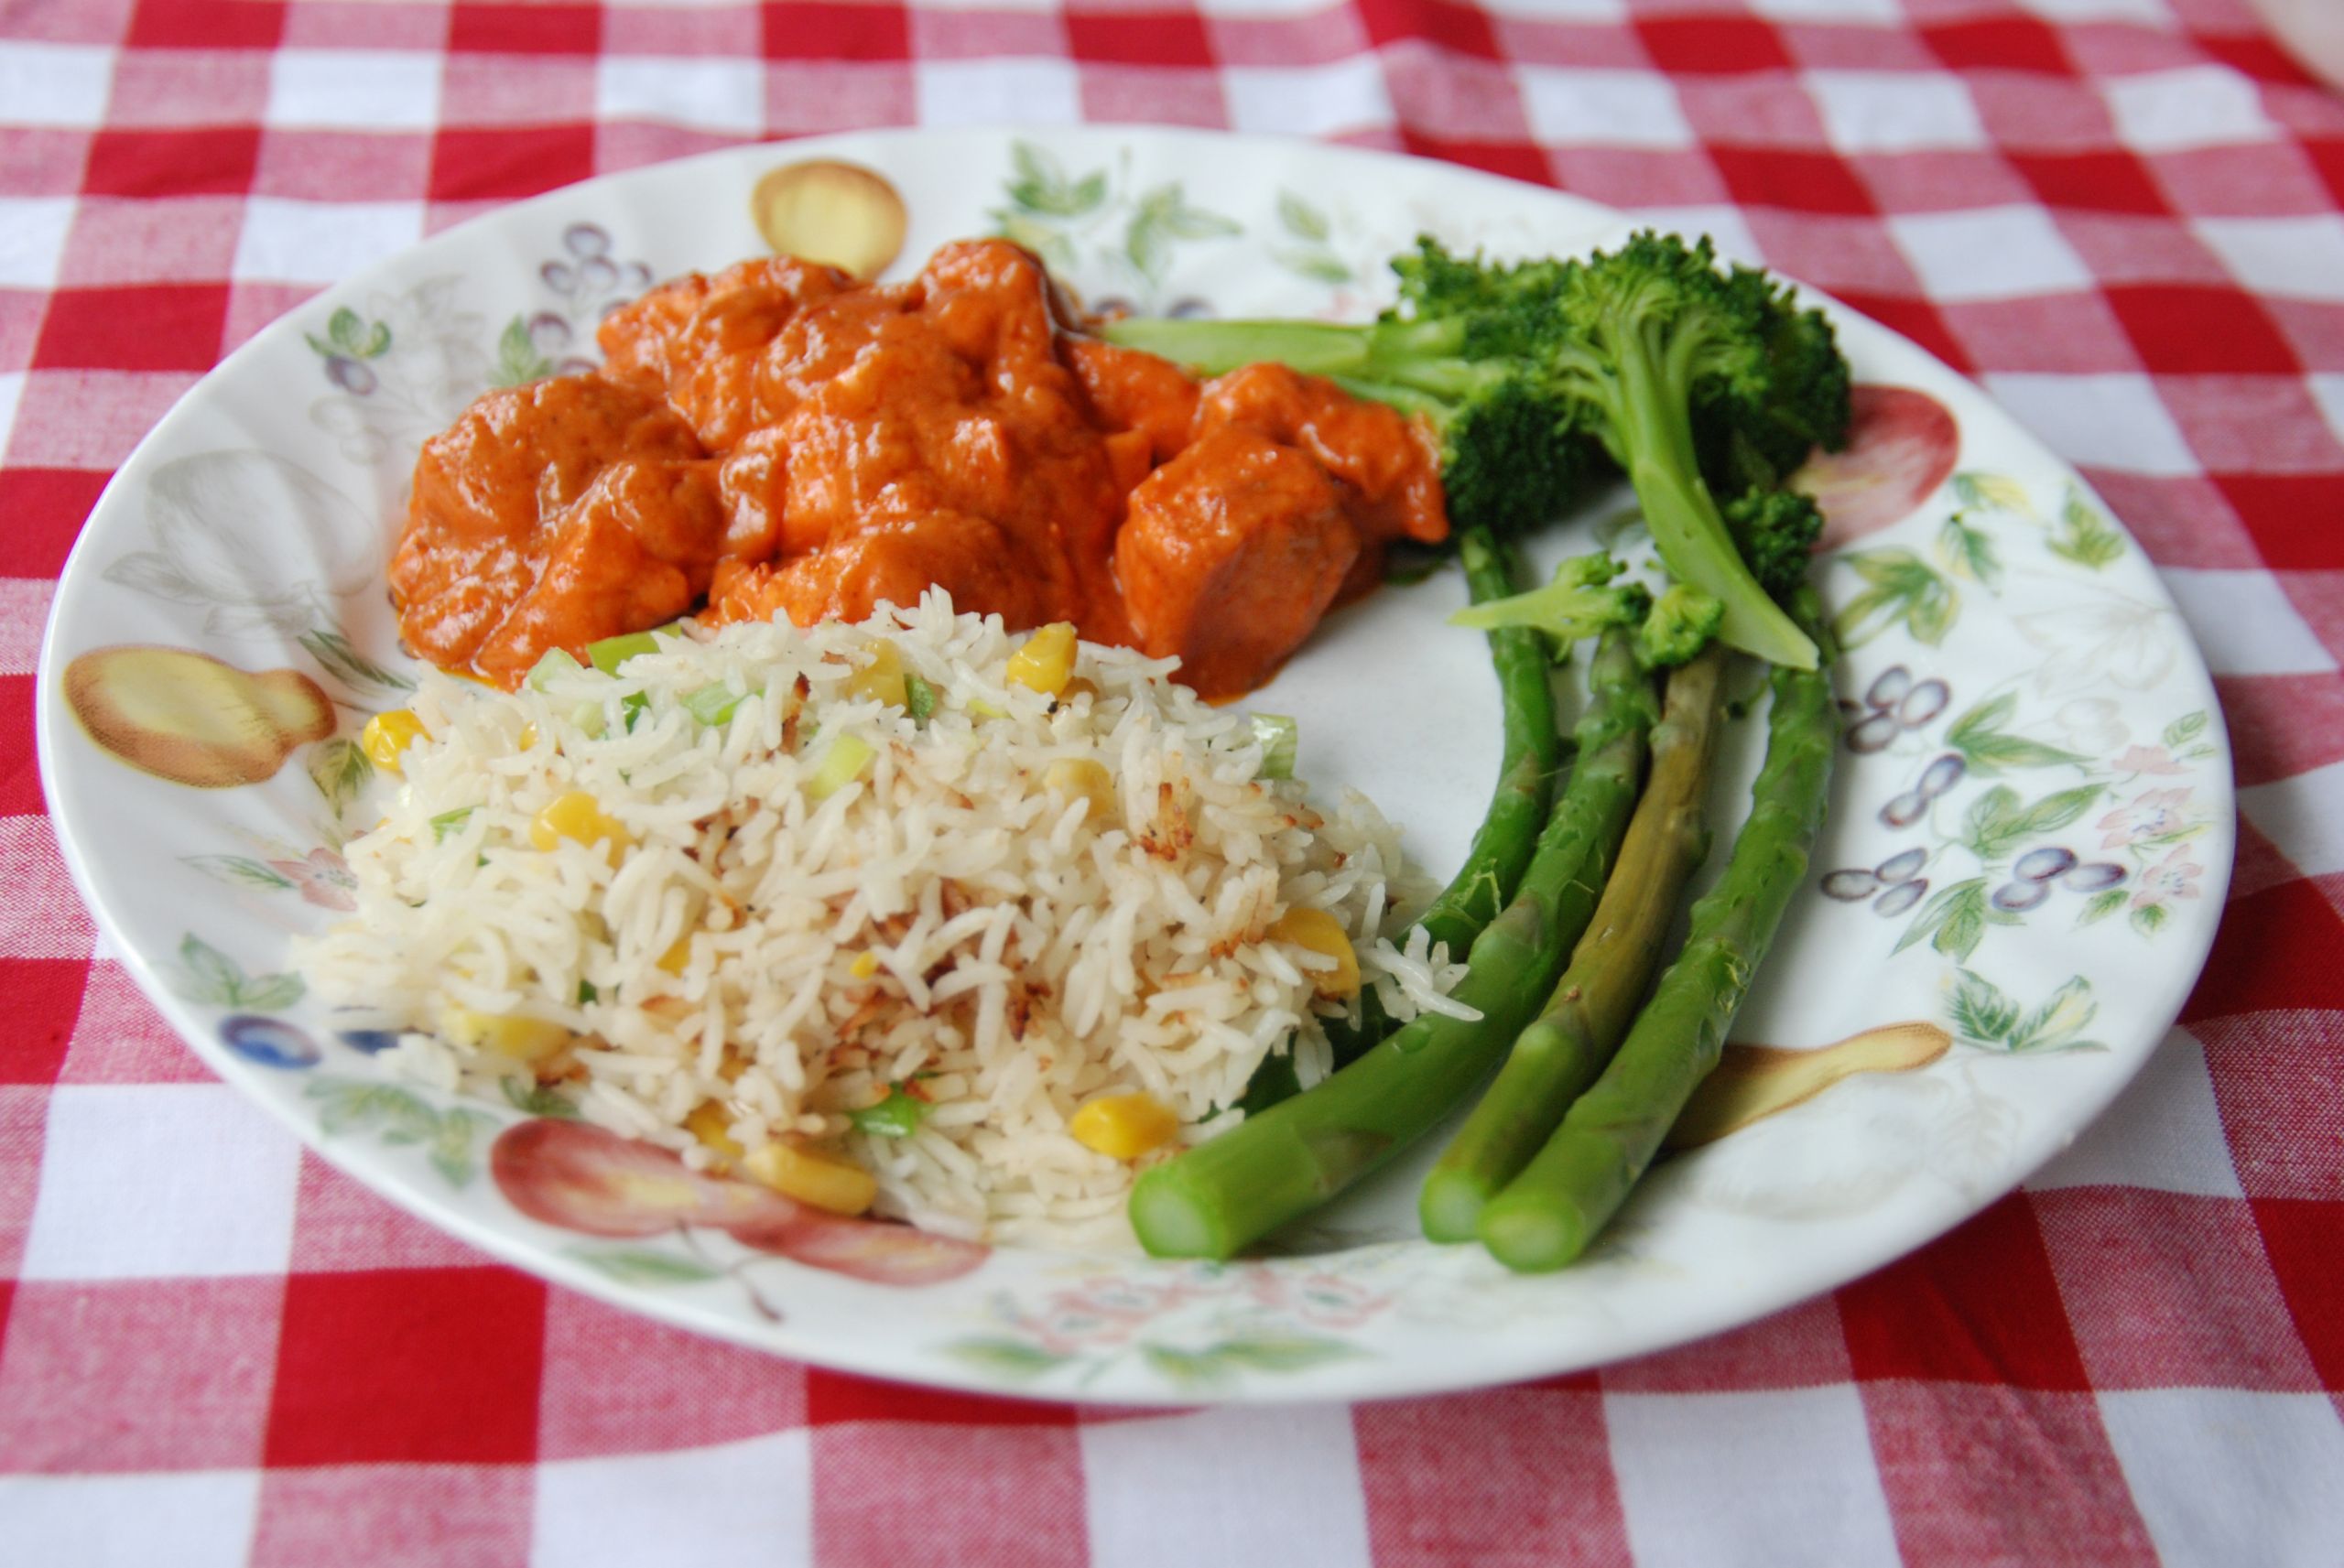 Easy Indian Vegetarian Dinner Recipes Best Of Easy Healthy Indian Ve Arian Dinner Recipes Of Easy Indian Vegetarian Dinner Recipes Scaled 